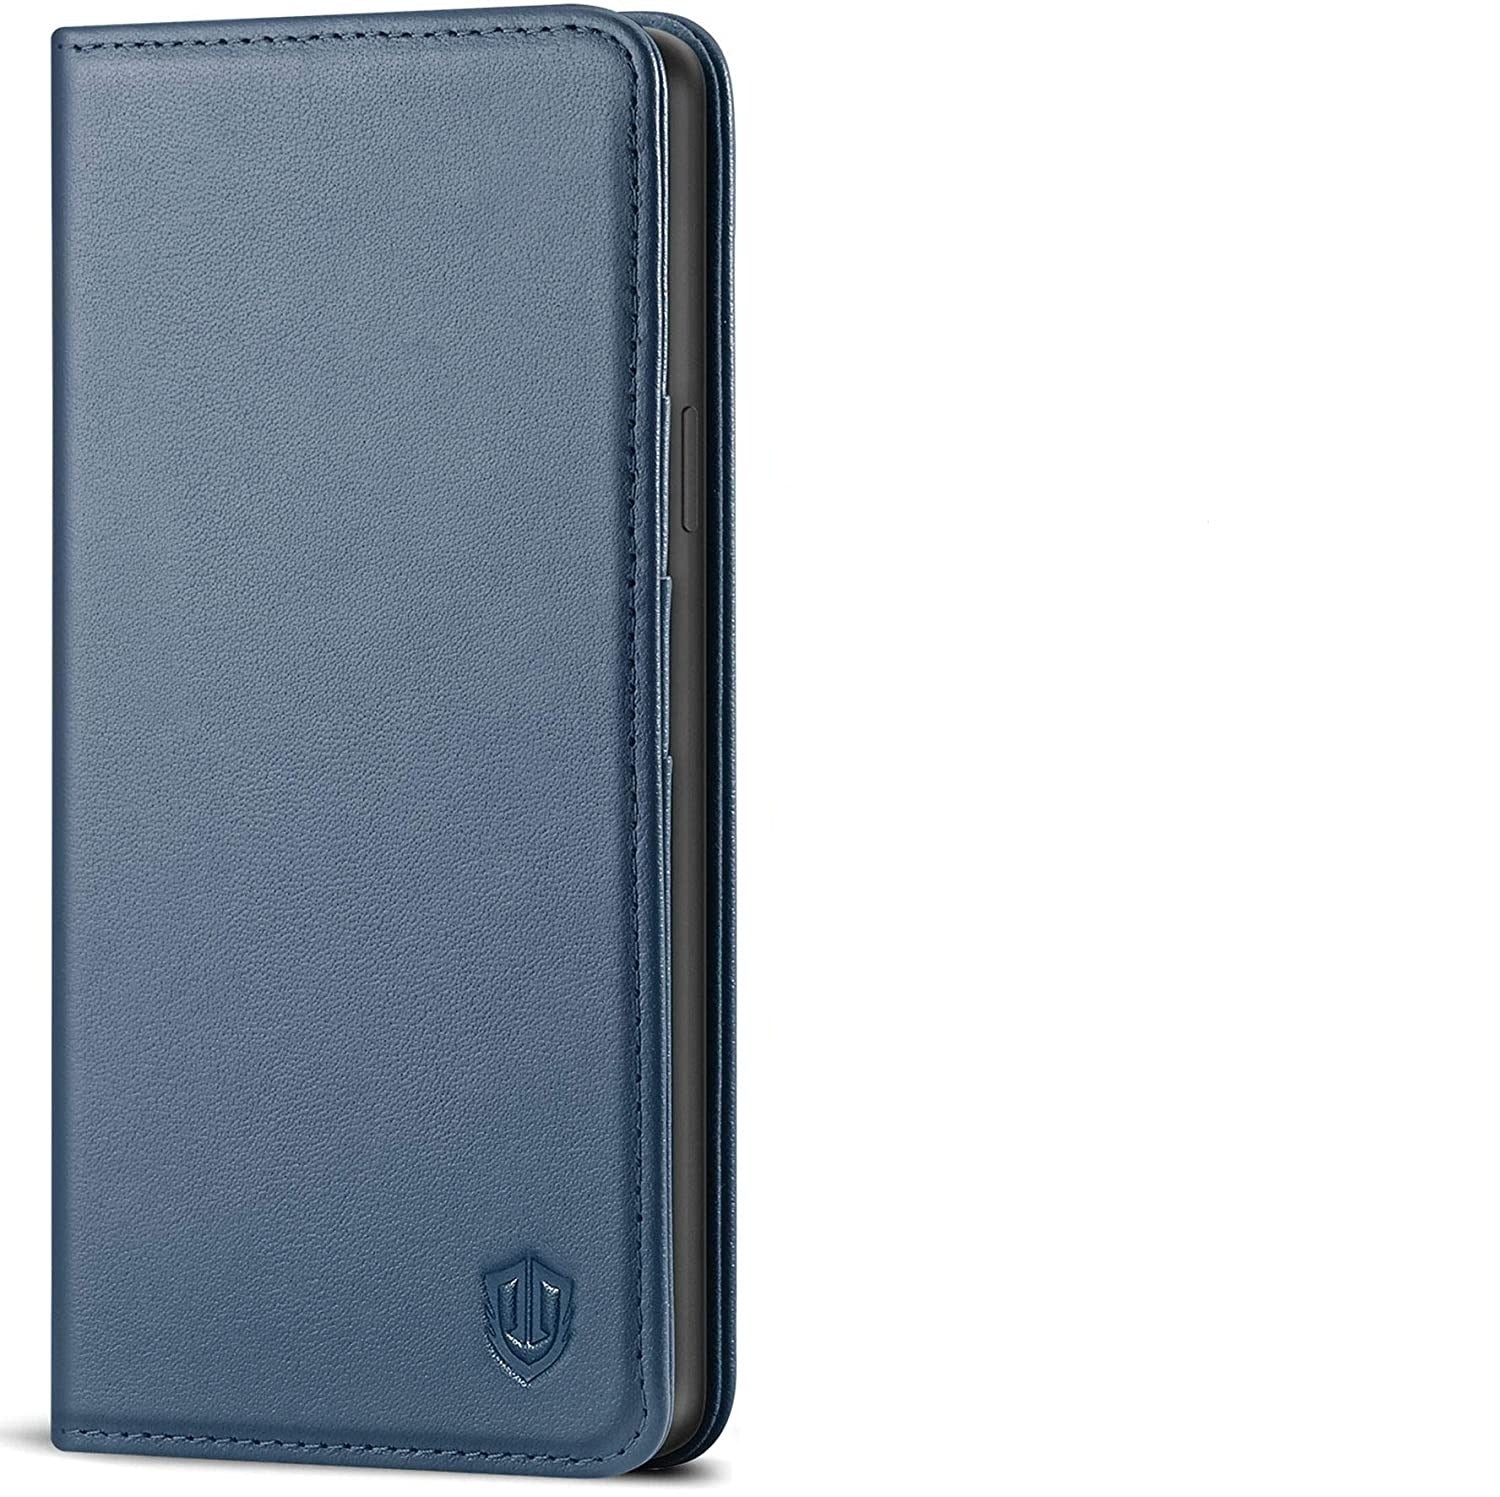 SHIELDON Genuine Leather Galaxy S9 Wallet Case - Blue. - e4cents